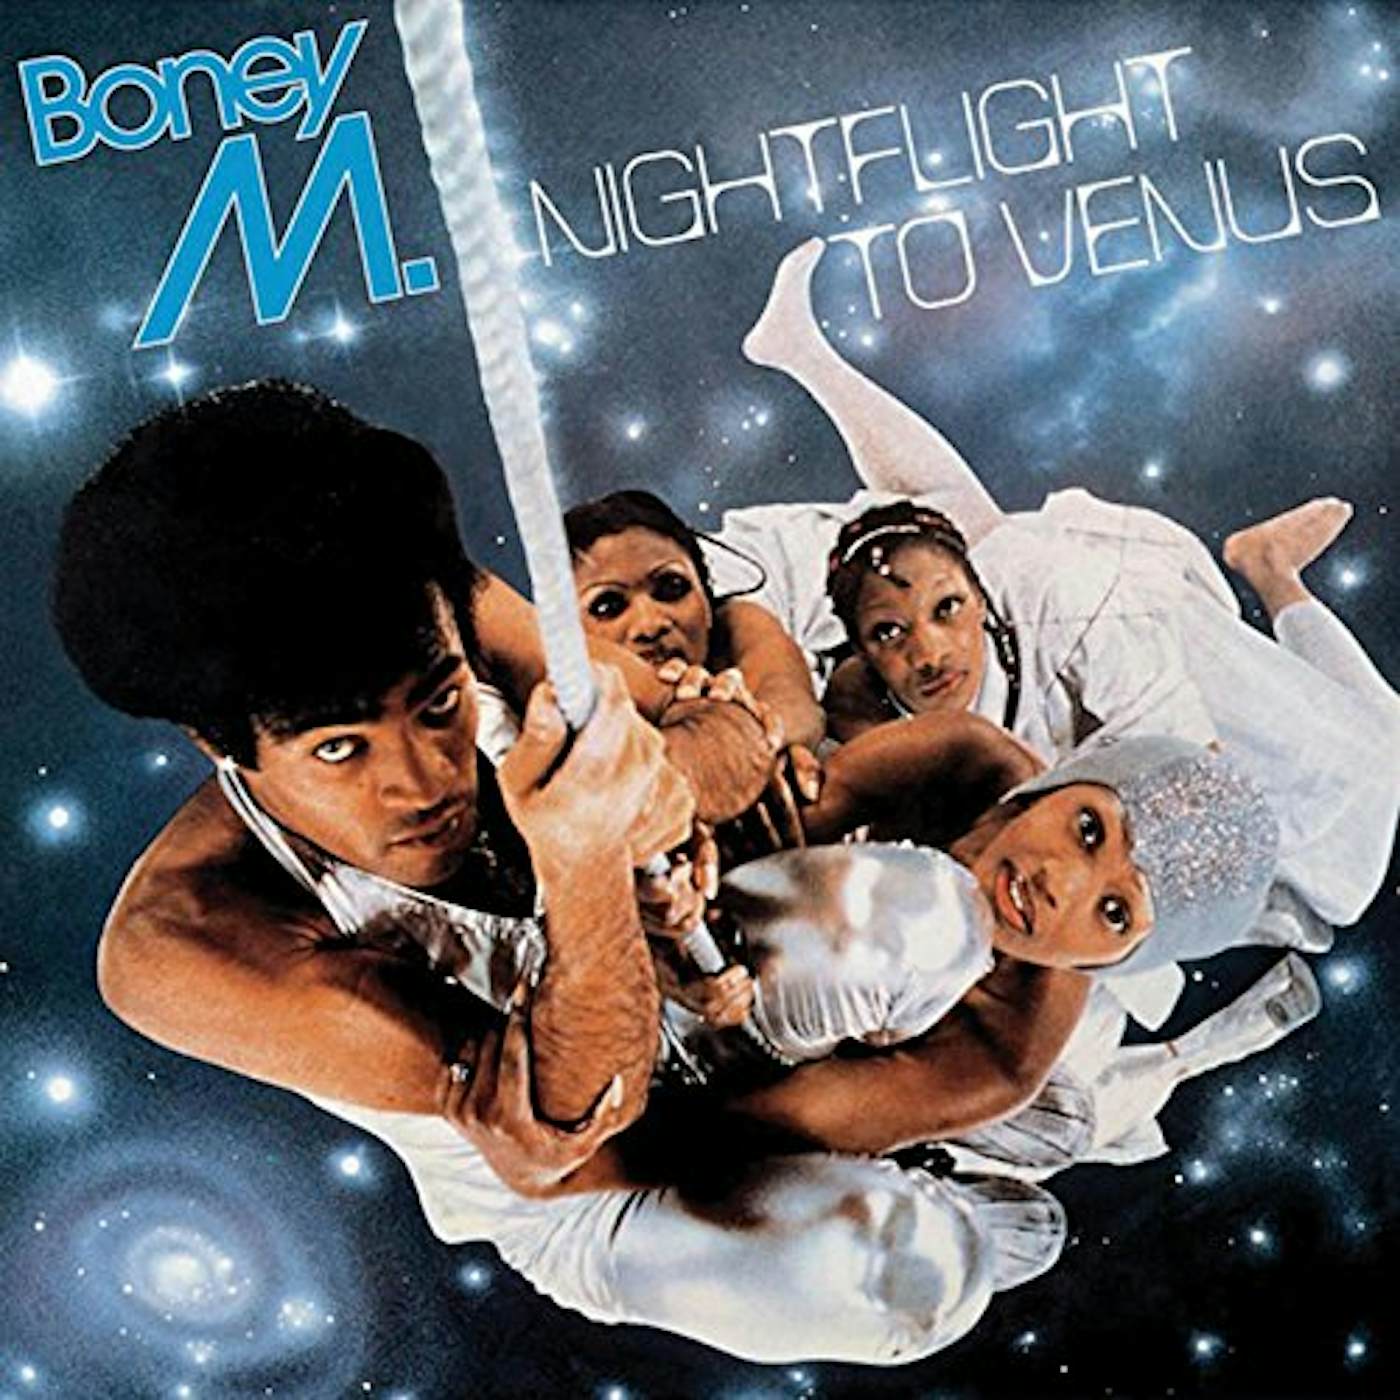 Boney M. NIGHTFLIGHT TO VENUS (1978) Vinyl Record